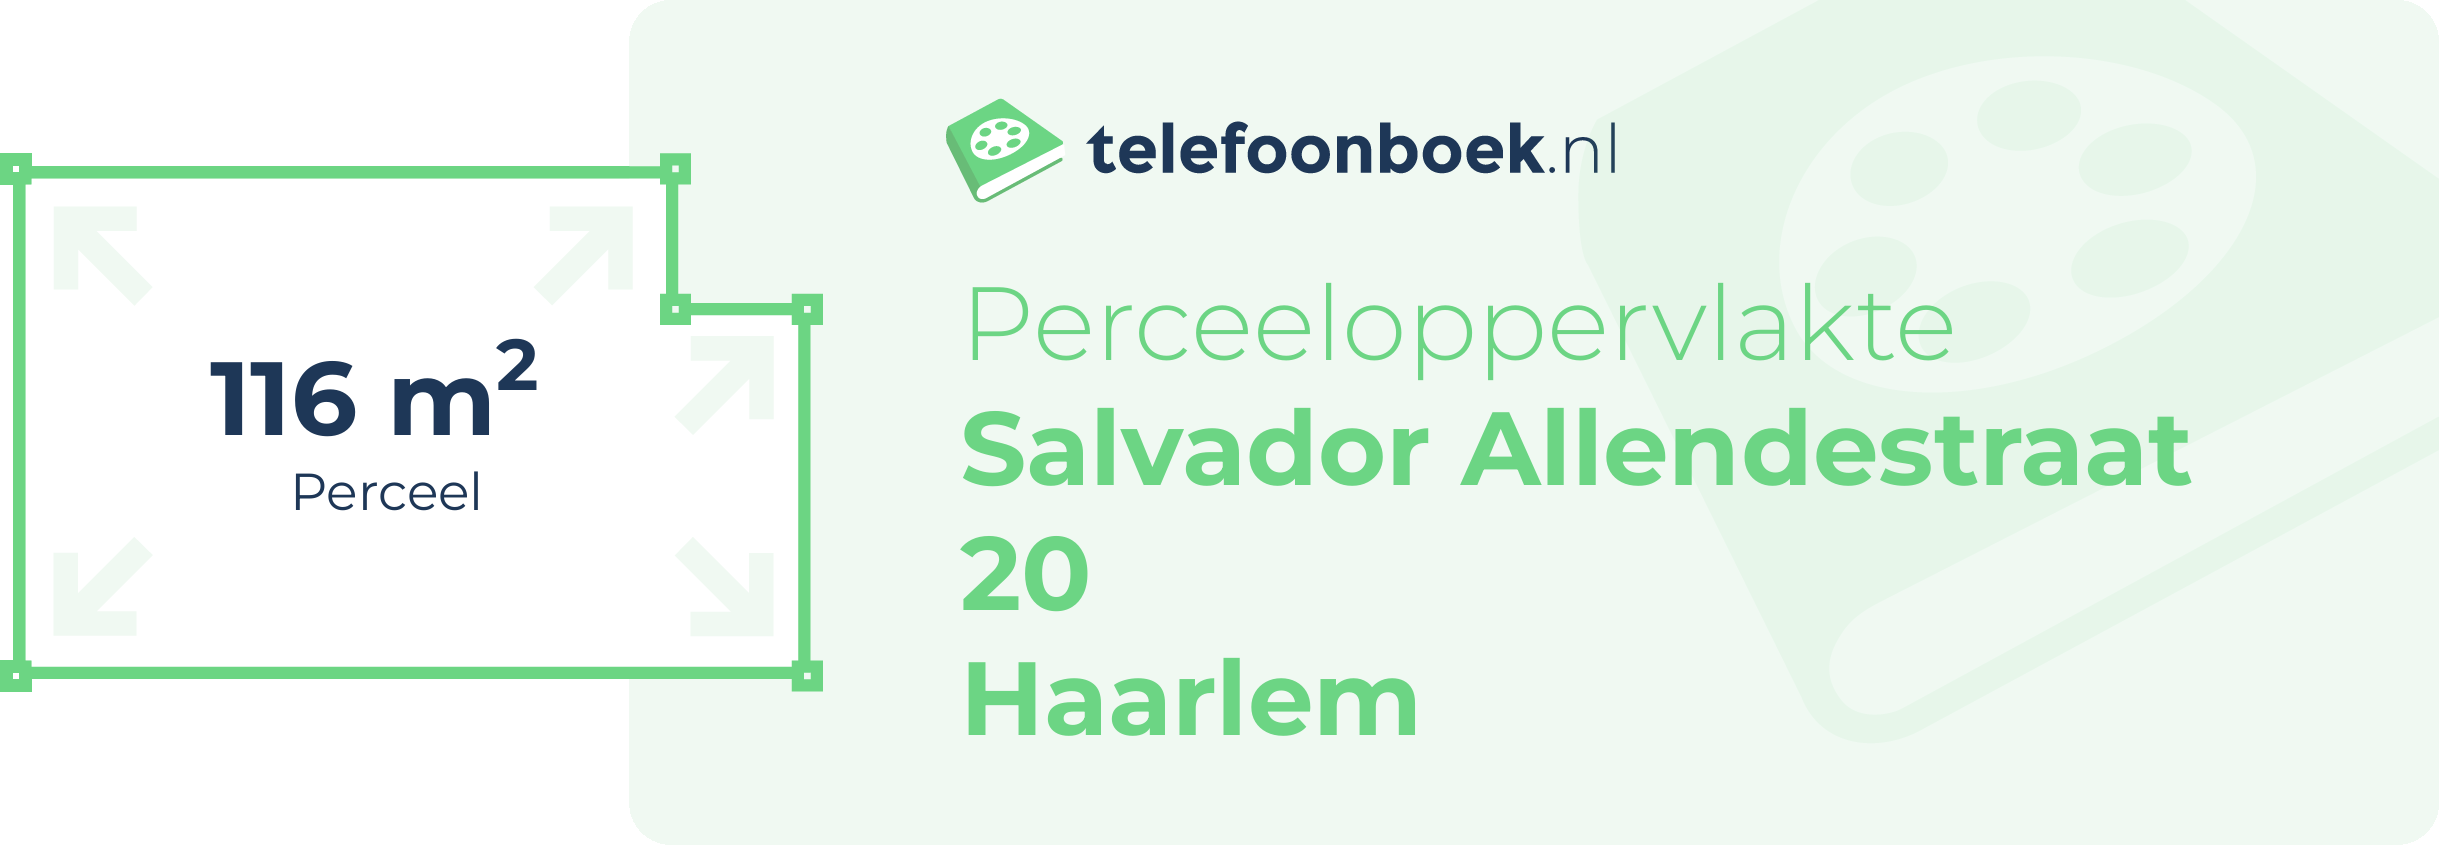 Perceeloppervlakte Salvador Allendestraat 20 Haarlem